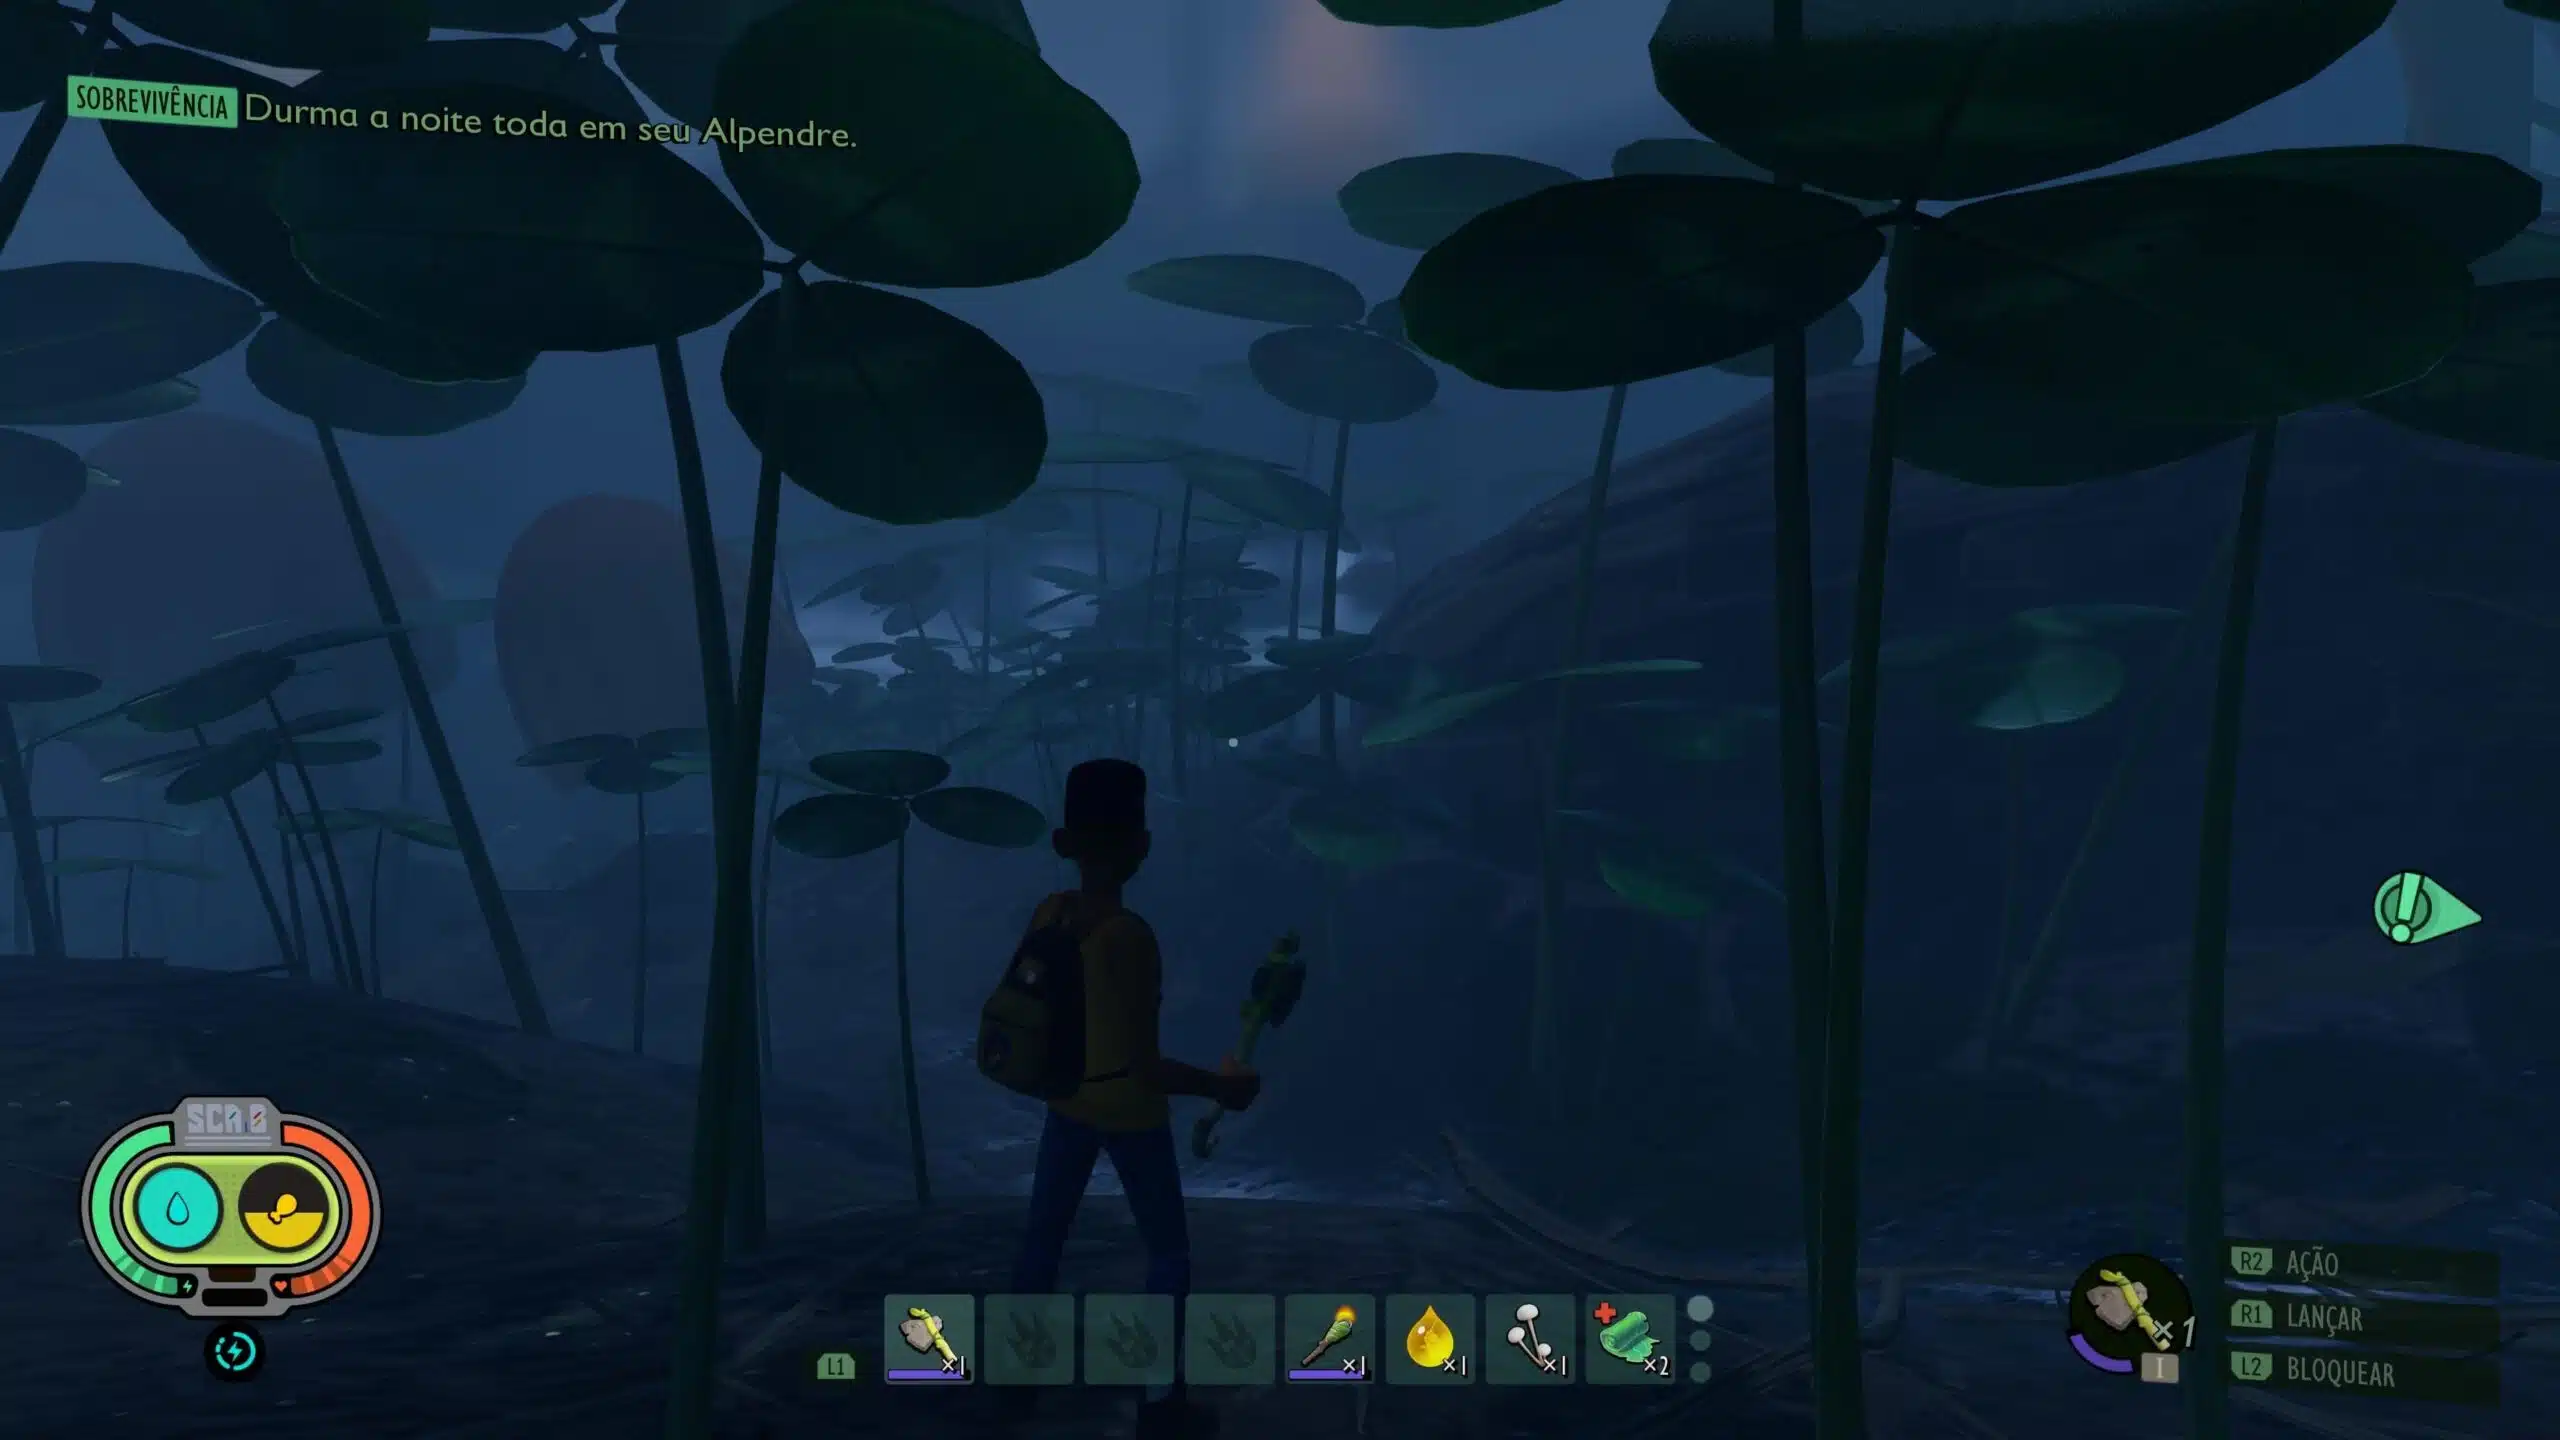 Grounded floresta de noite